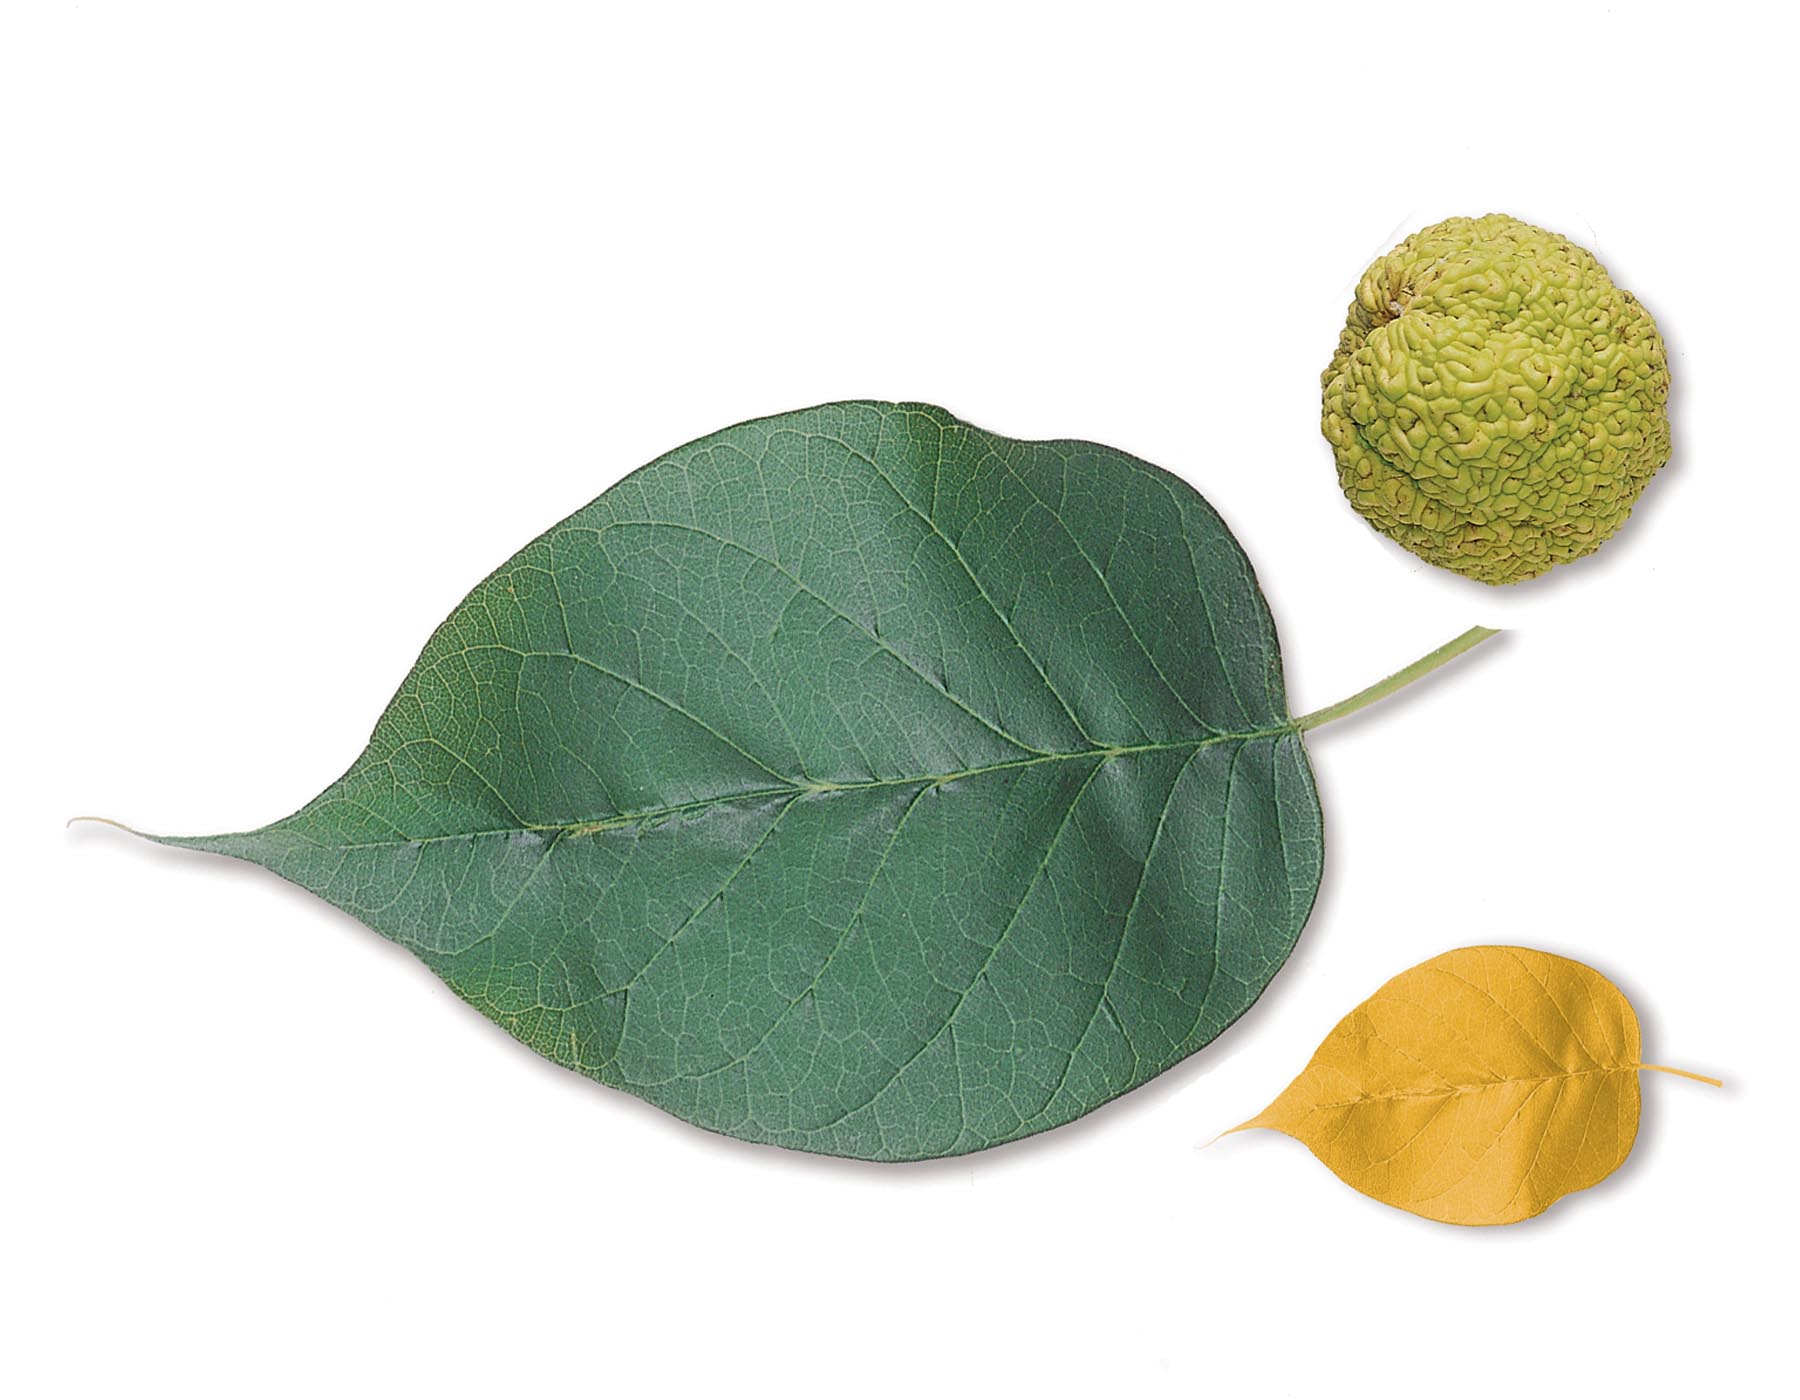 Osage orange leaf, smaller yellow (autumn) leaf, and fruit